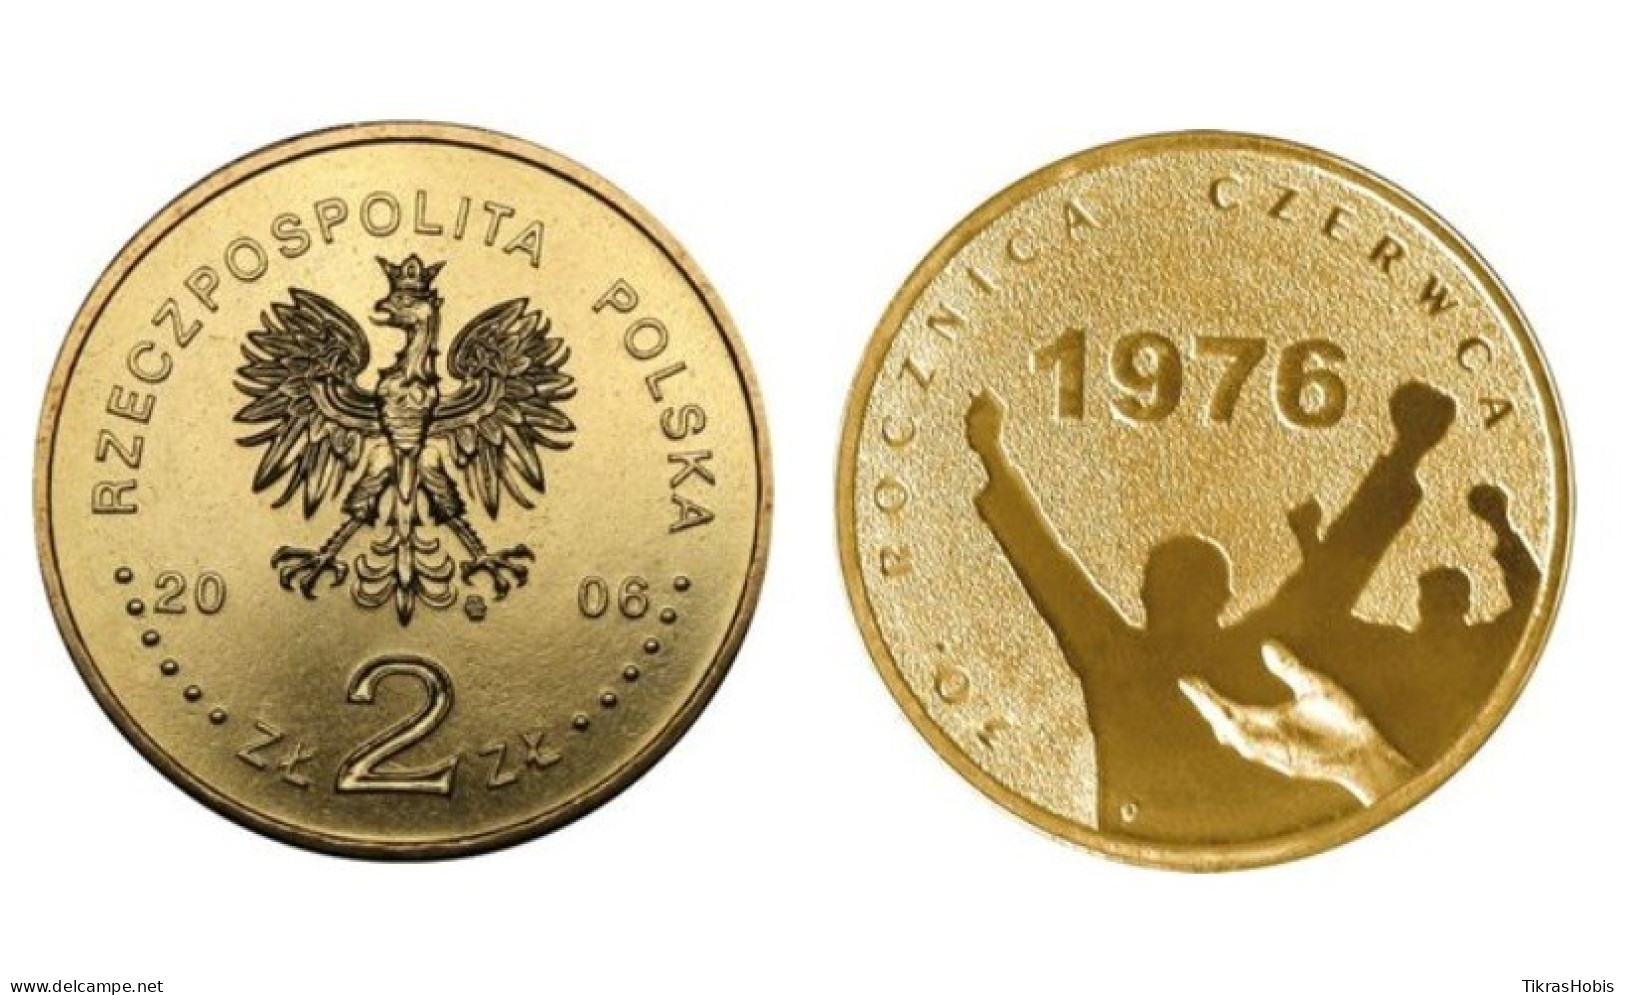 Poland 2 Zlotys, 2006 1976 June 30th Anniversary Y571 - Polonia